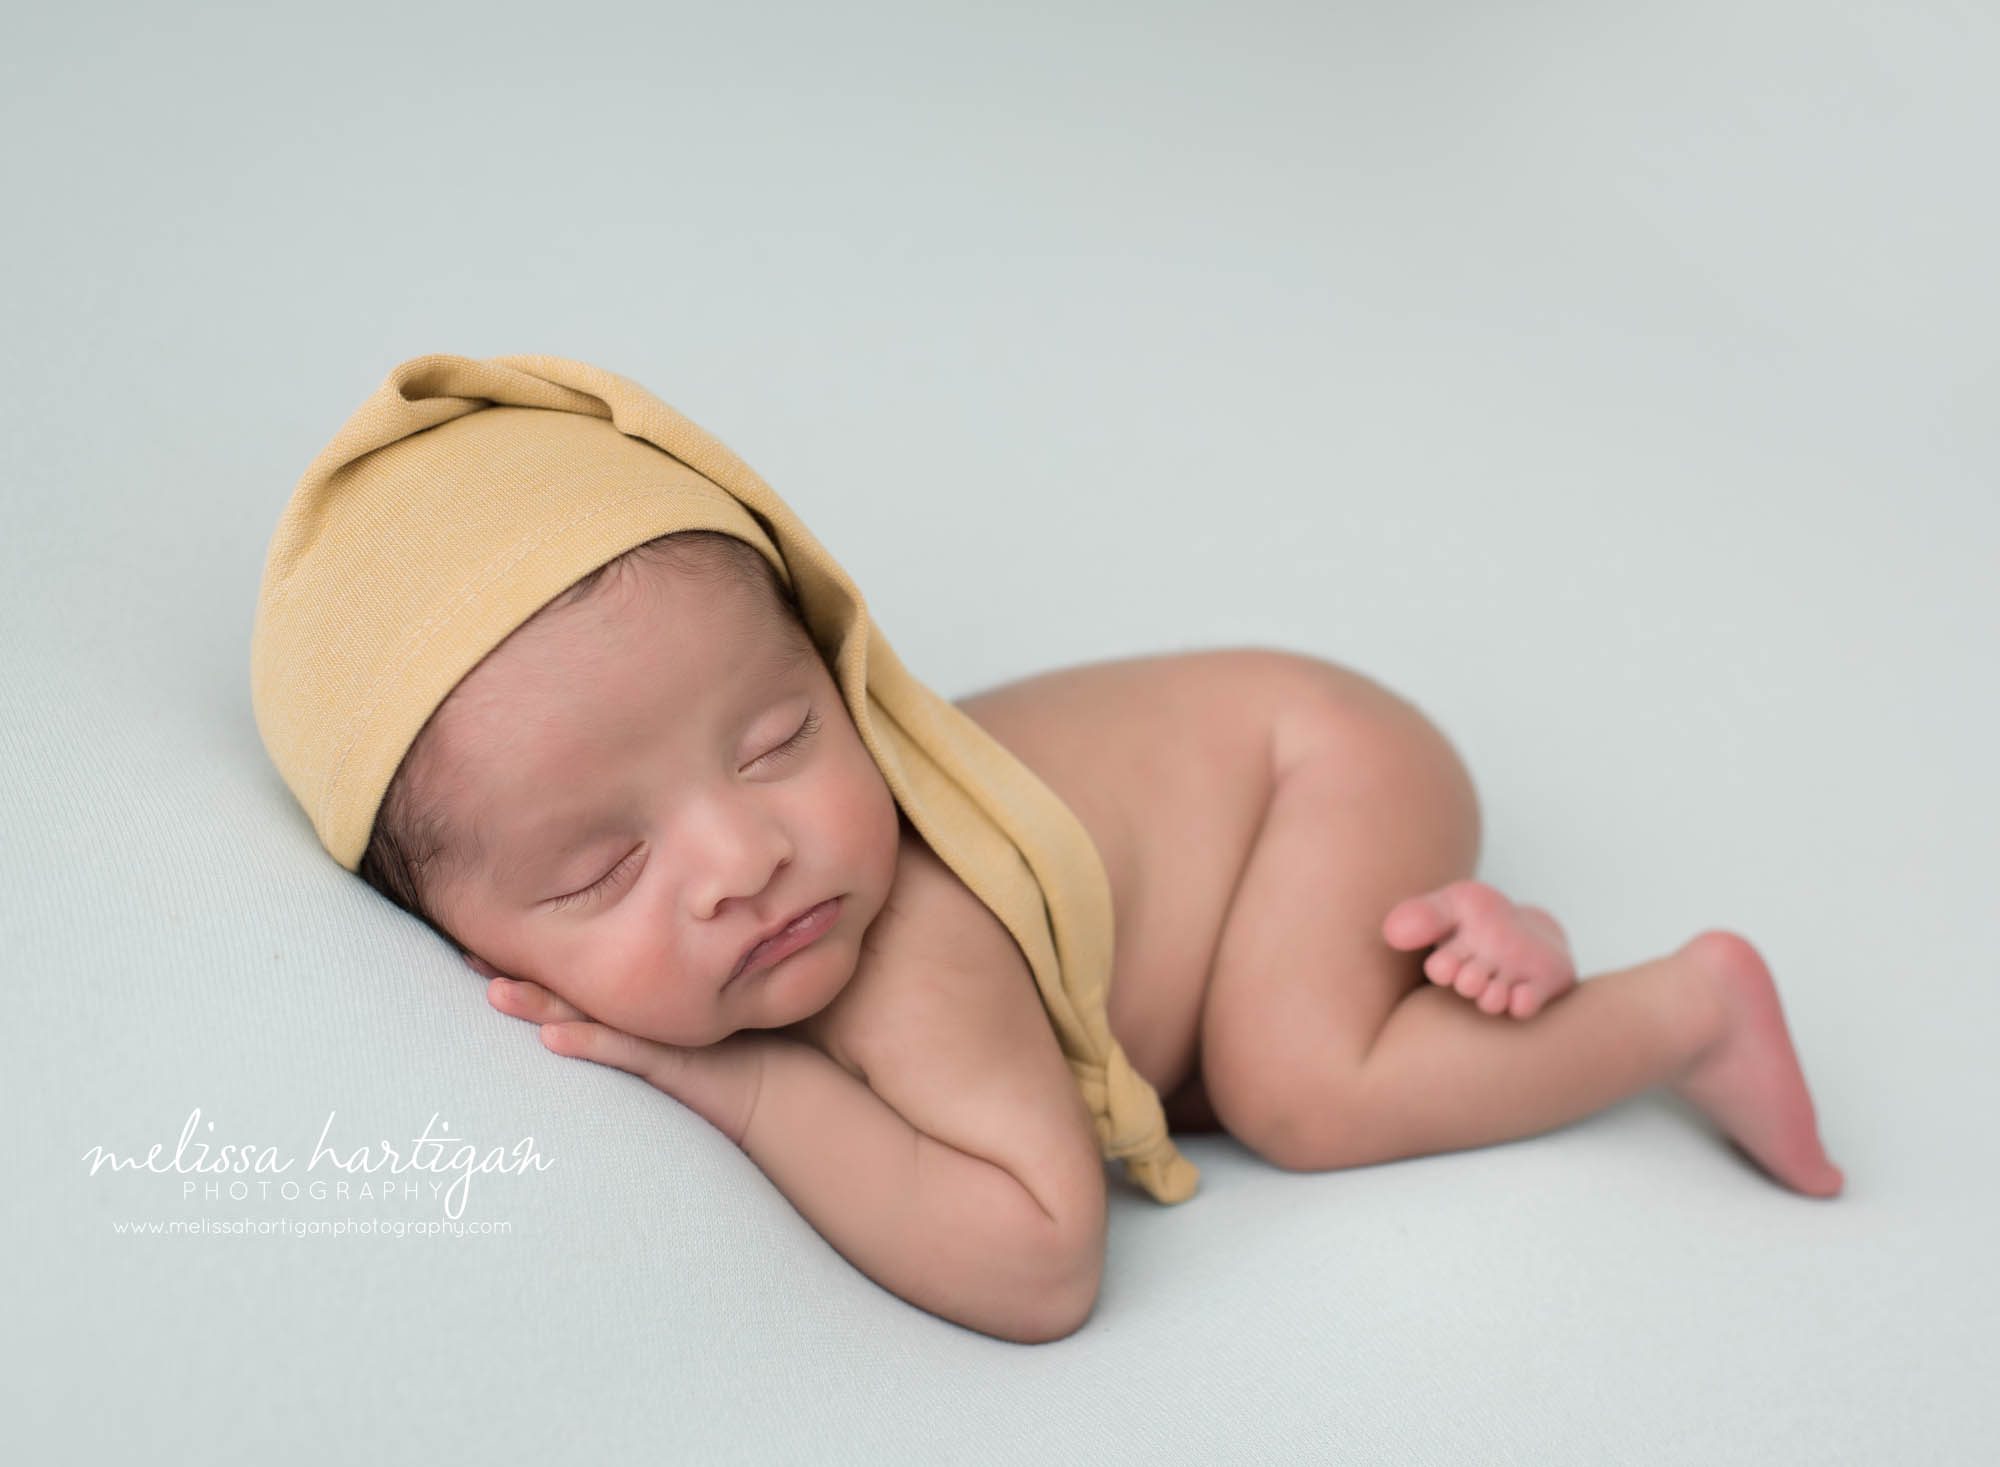 newborn baby boy posed on light blue backdrop wearing yellow sleepy cap glastonbury newborn photography